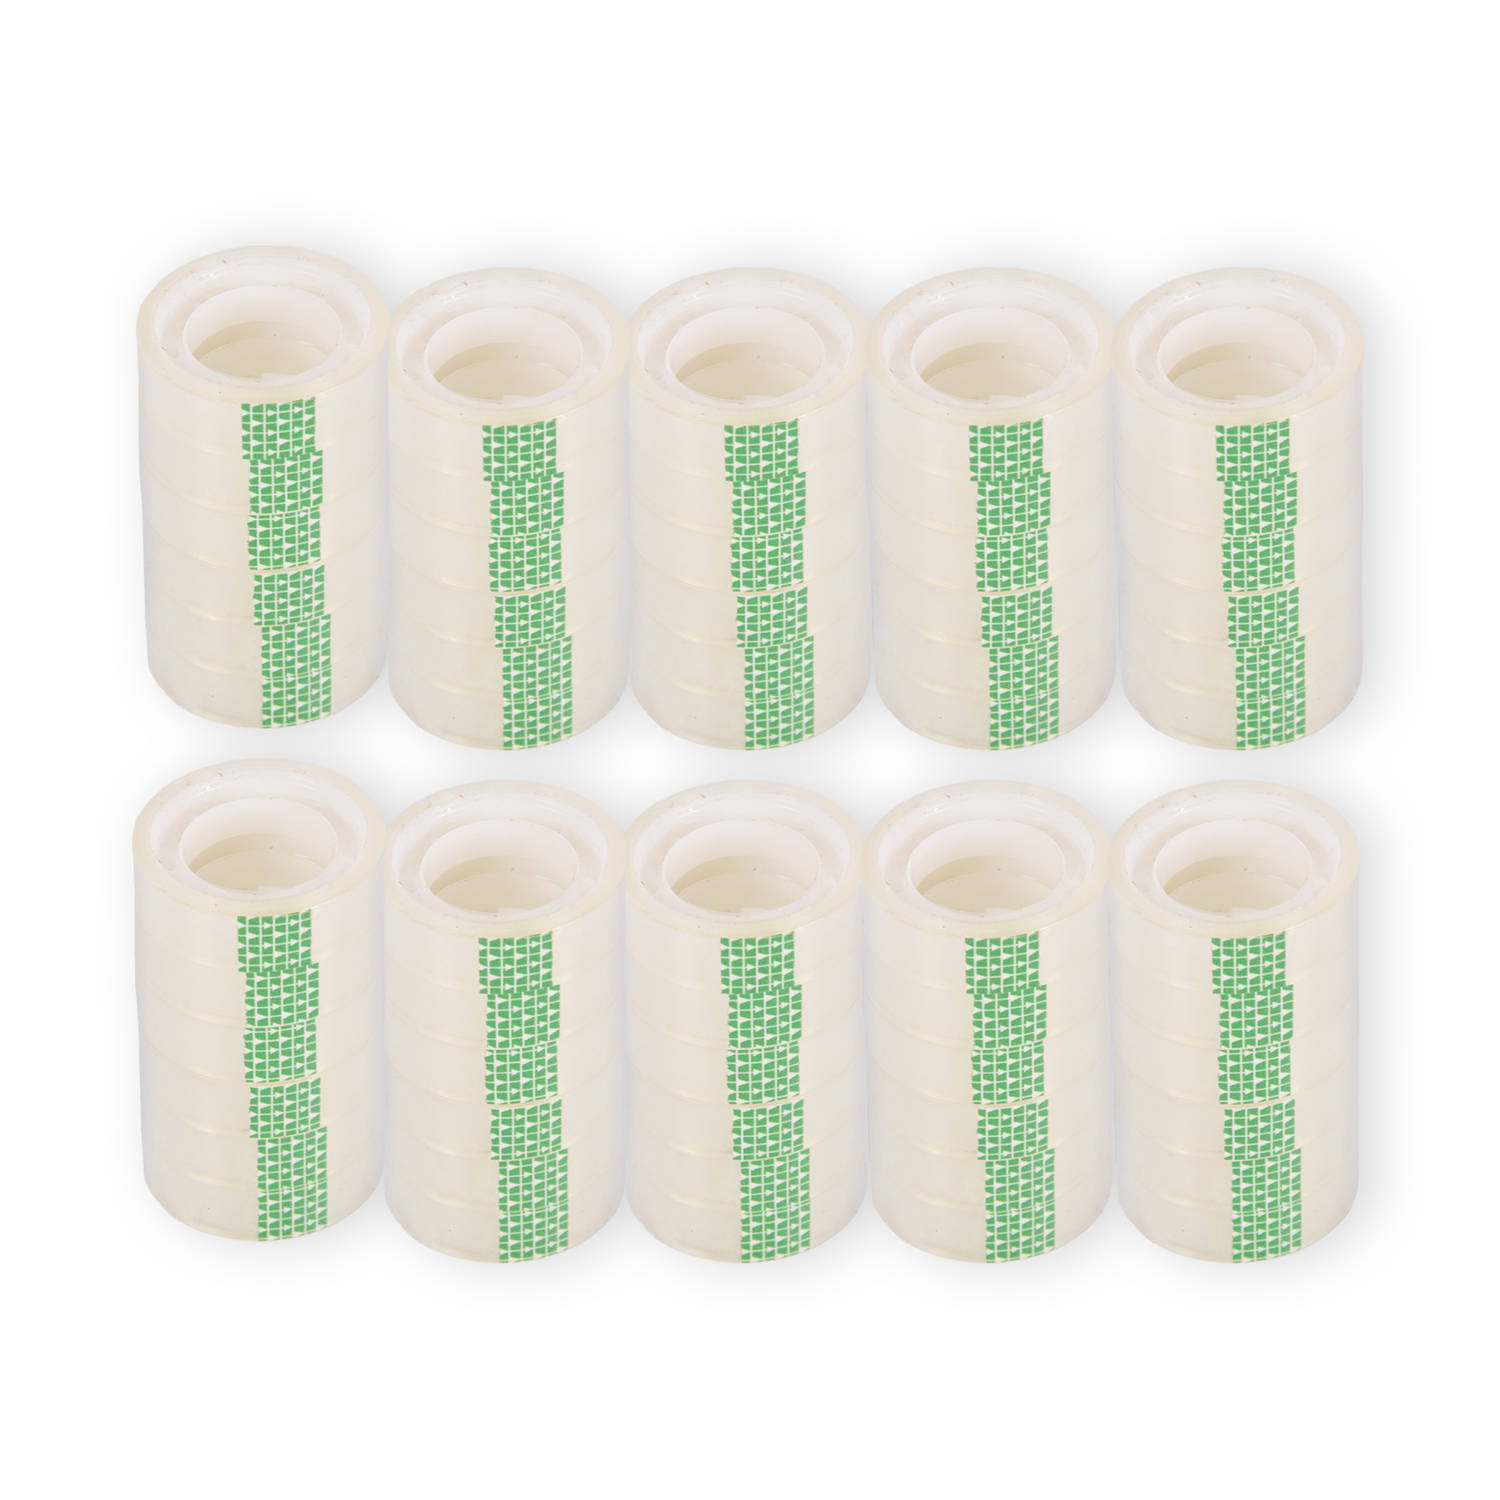 10 Sets Transparante Verpakkingstape Rol Karton Tape 4x4x1.2cm 350g Gewicht Polyester-Plastic Materi